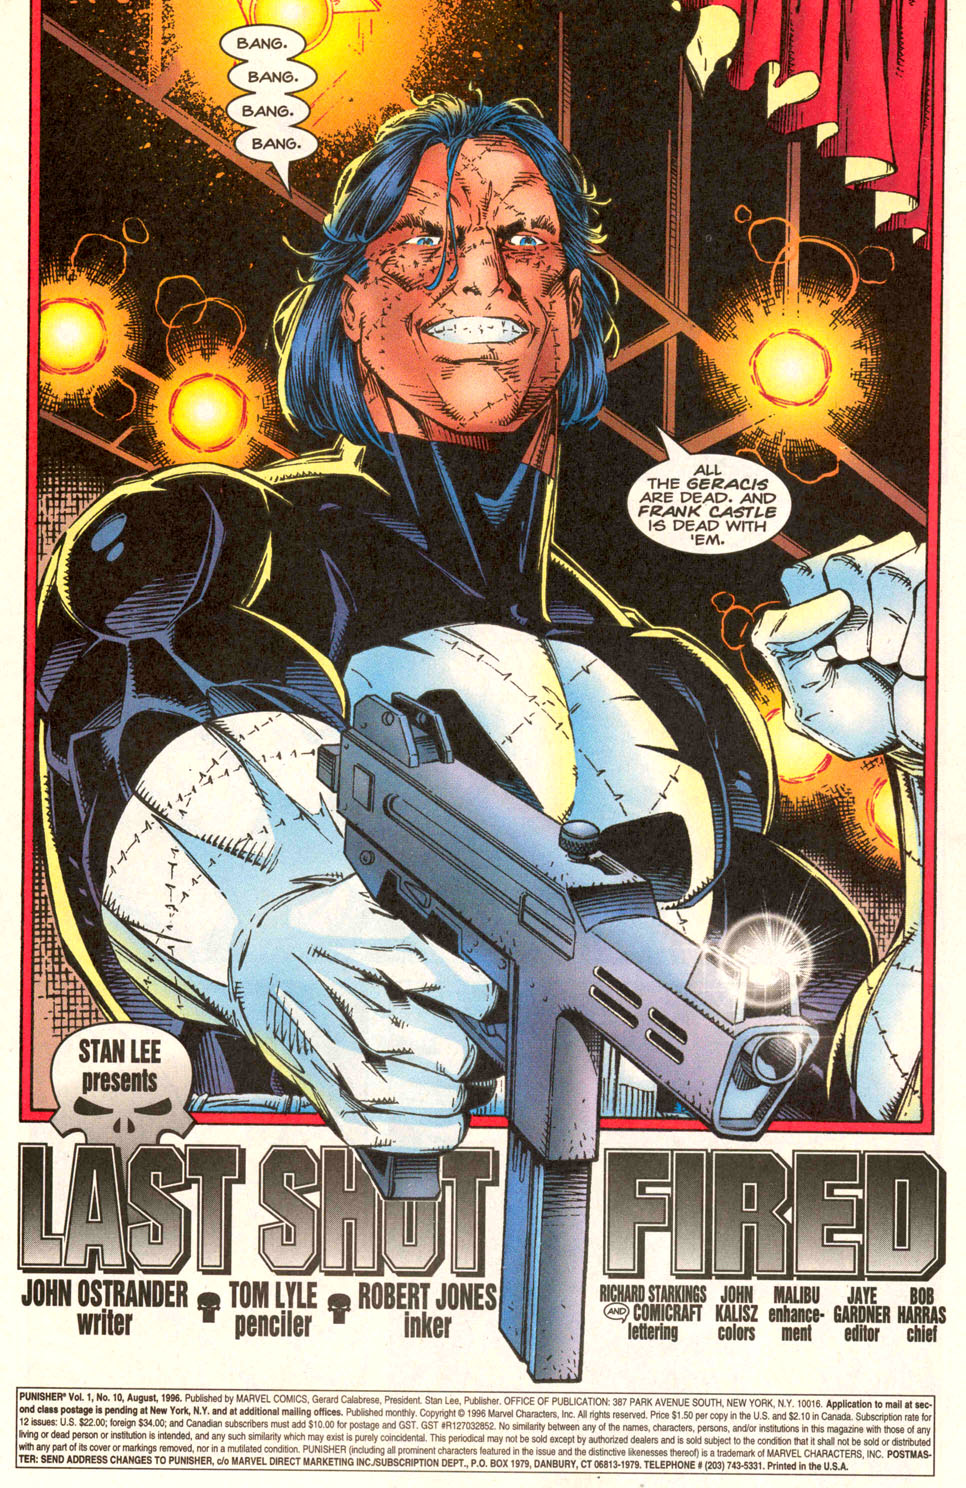 Punisher (1995) Issue #10 - Last Shot Fired #10 - English 2